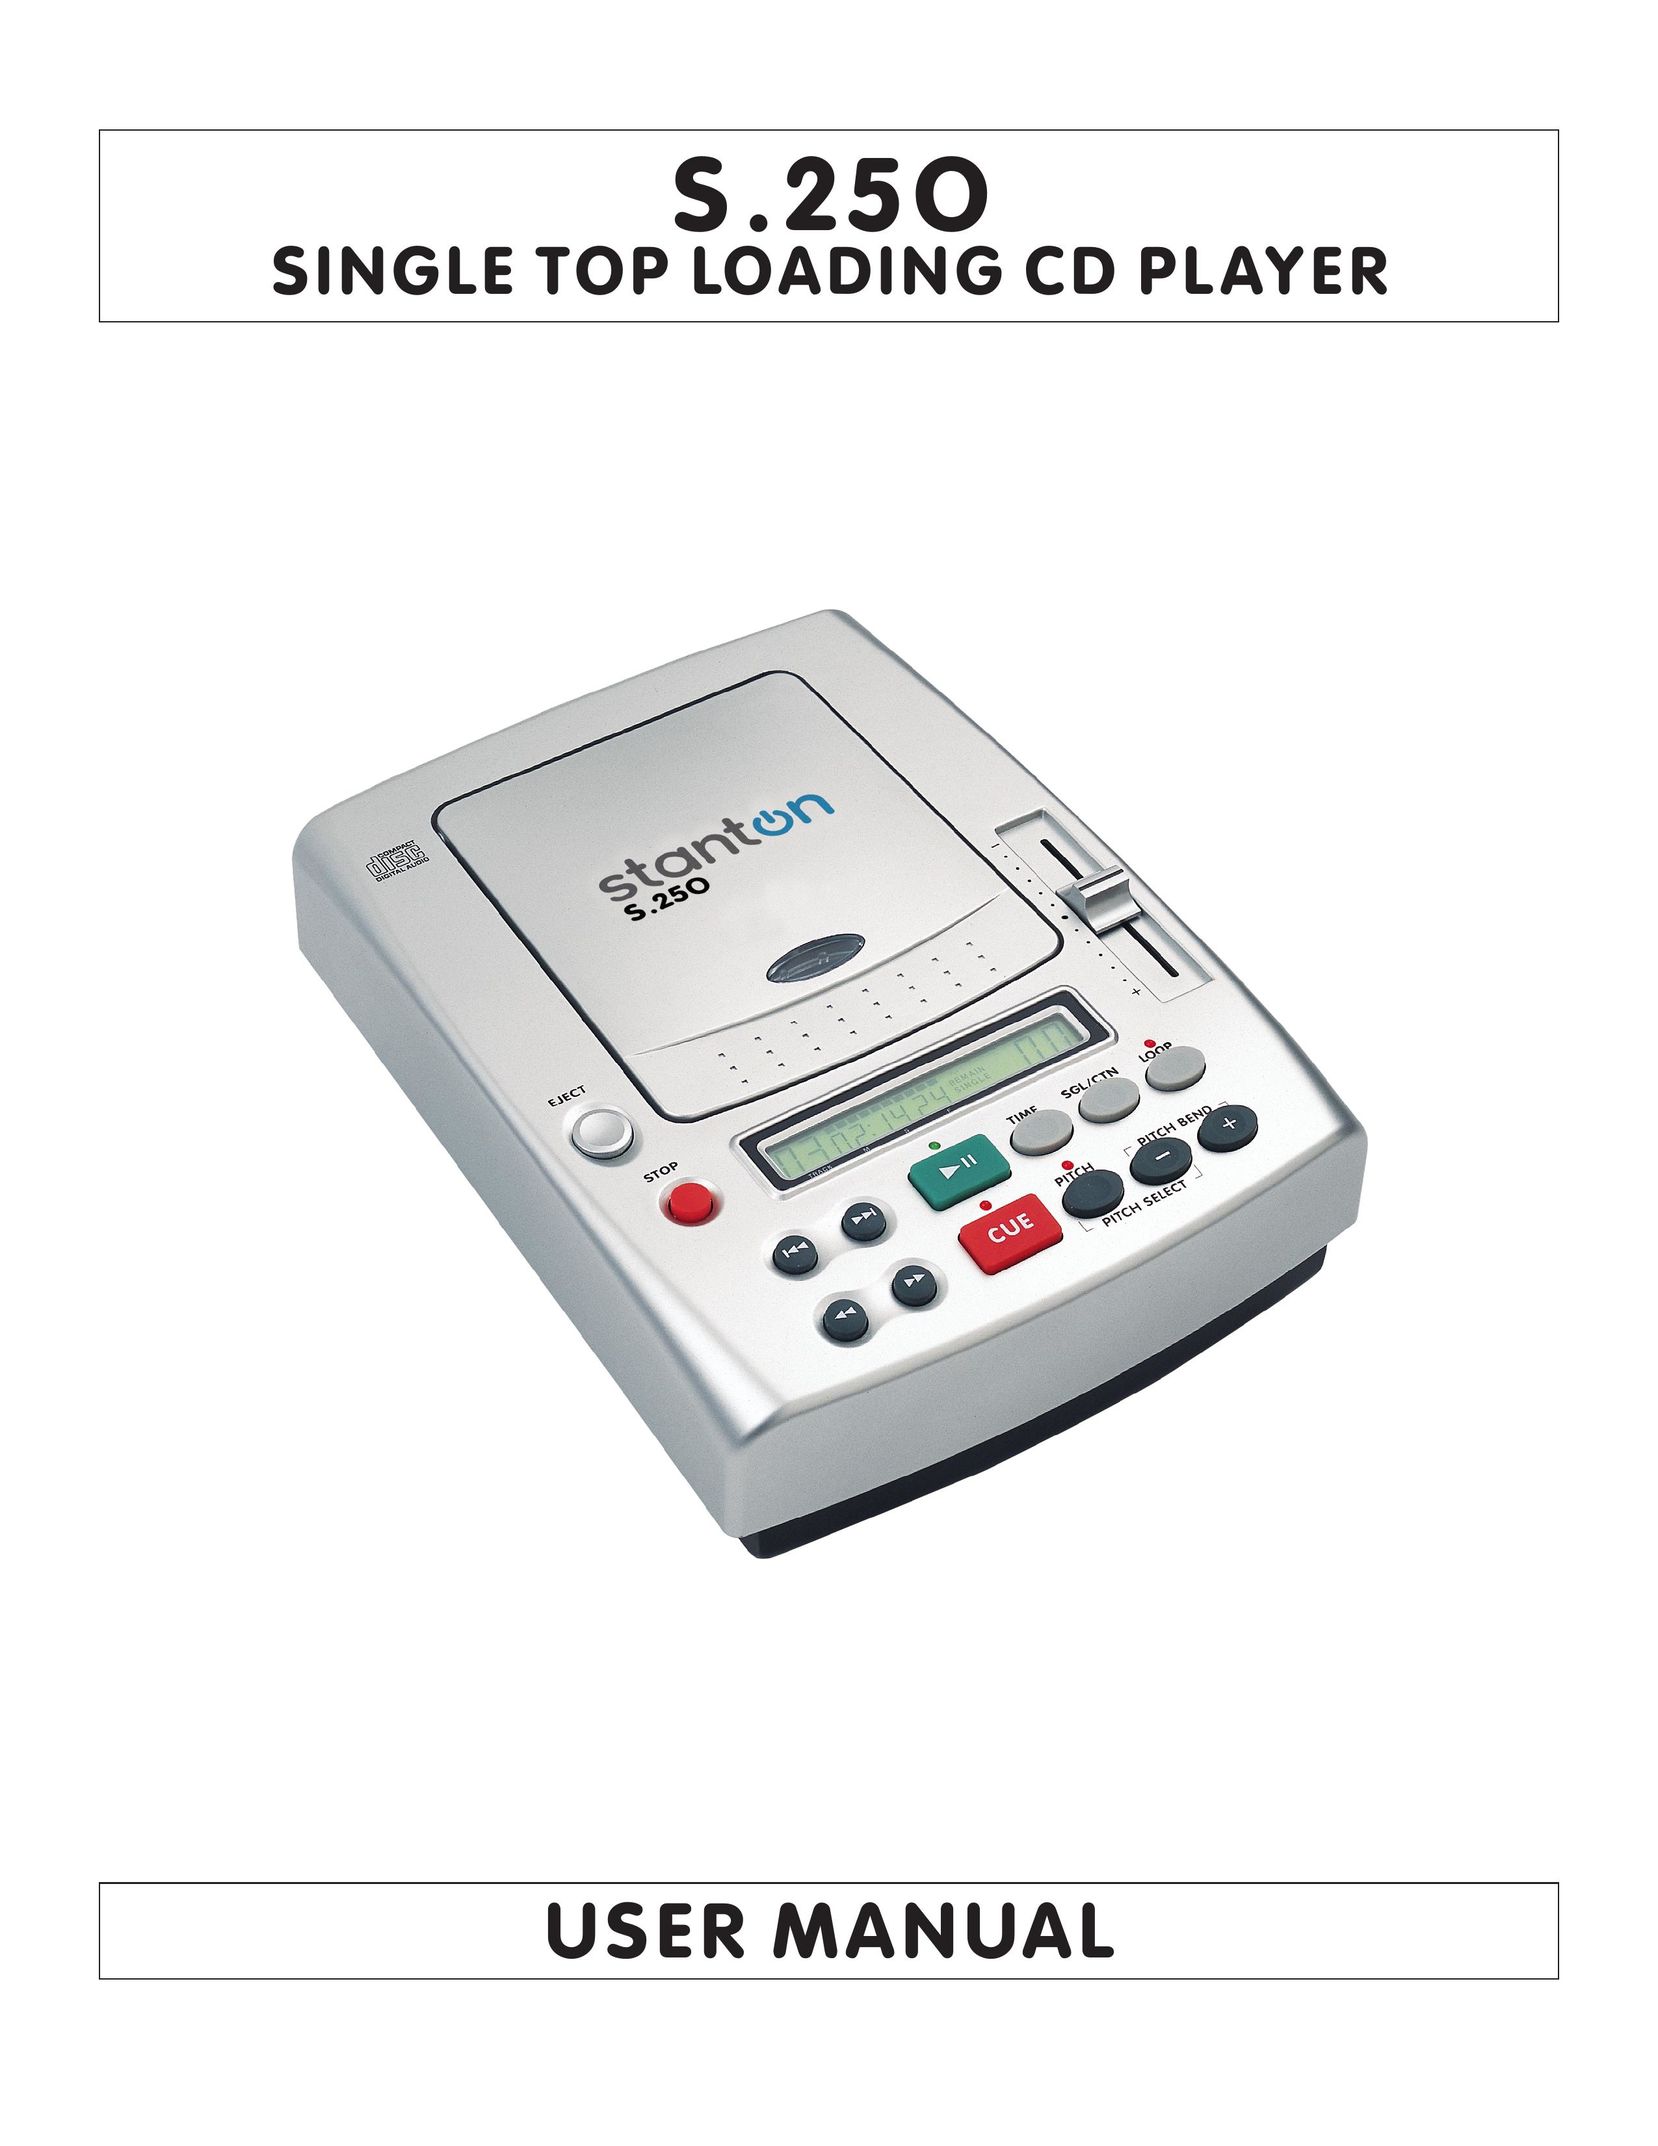 Stanton S.25O CD Player User Manual